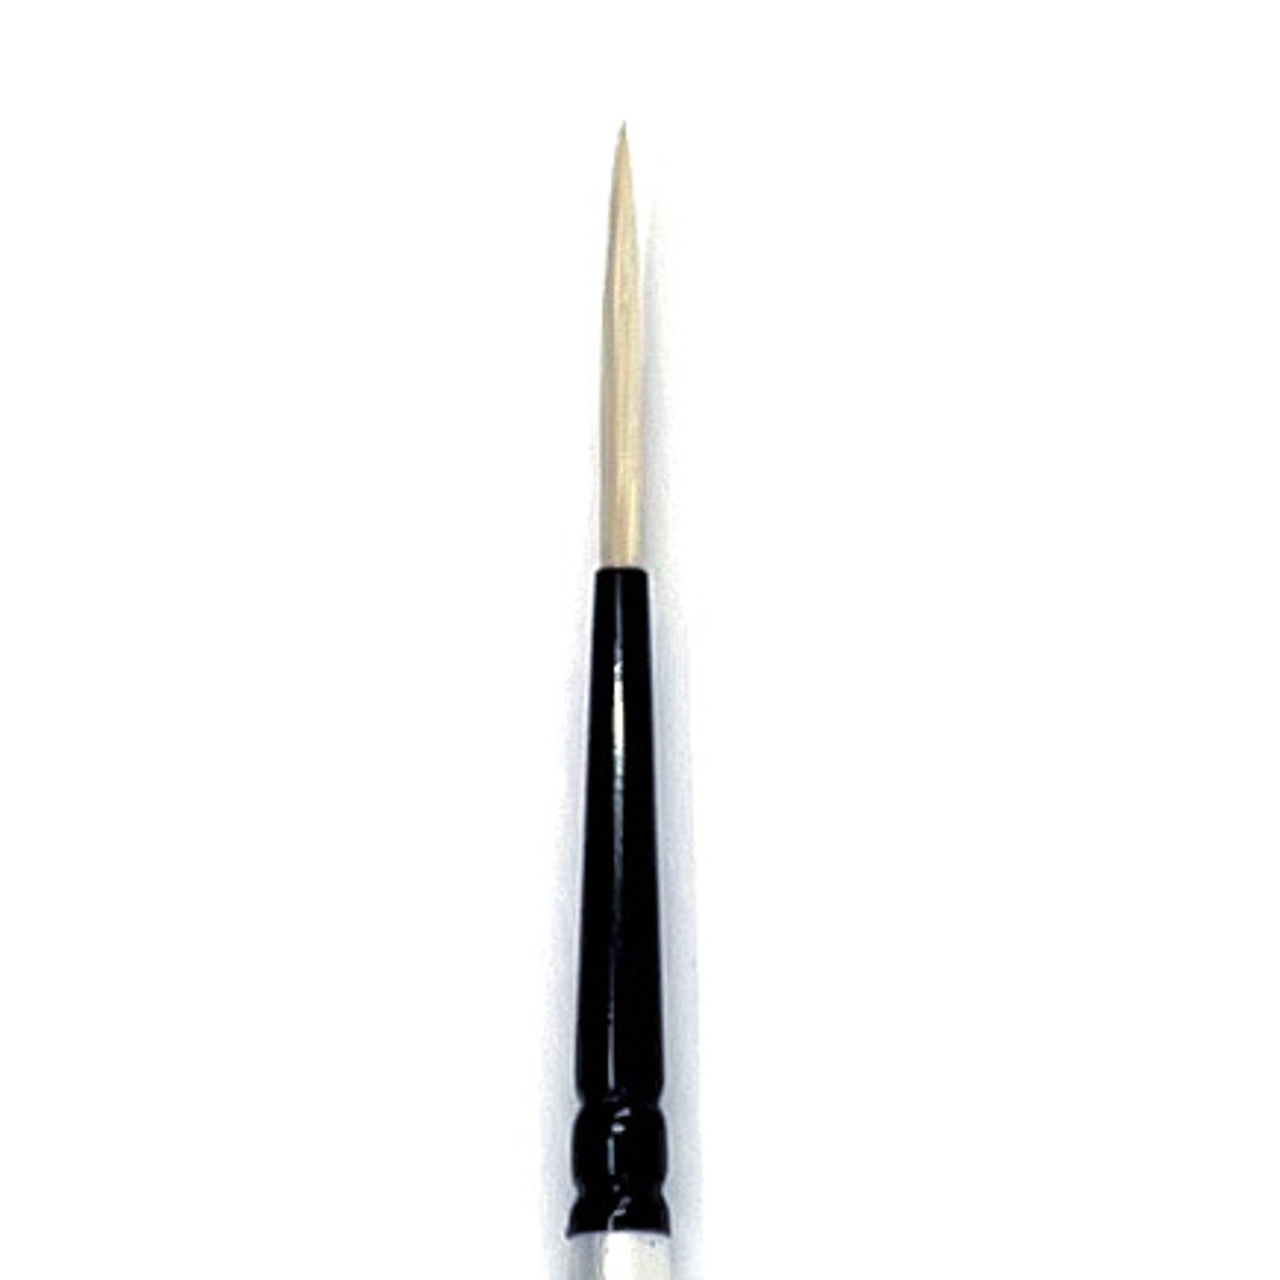 Weiler 40077 7/16 Bridled Glue Brush, Grey China Bristle, 1-1/4 Trim Length, Long Foam Handle